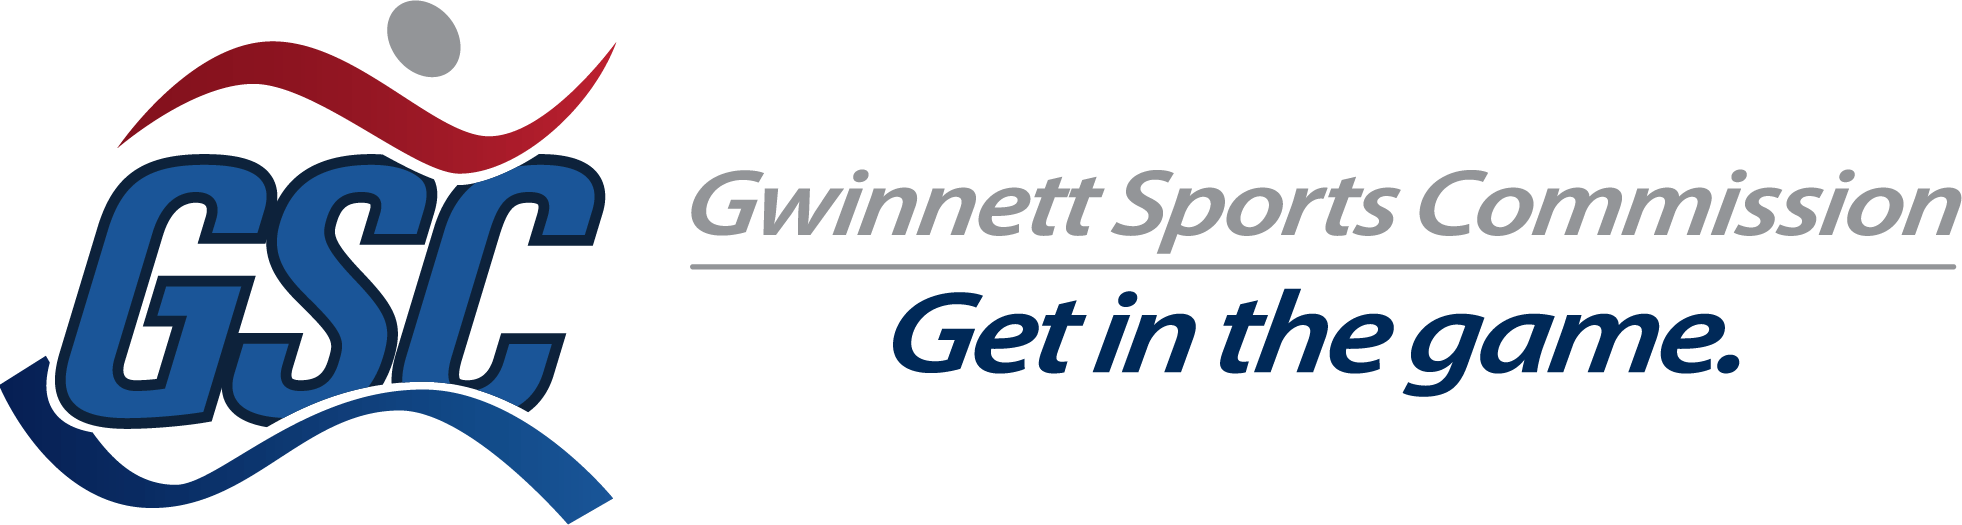 Gwinnett Sports Commission Logo